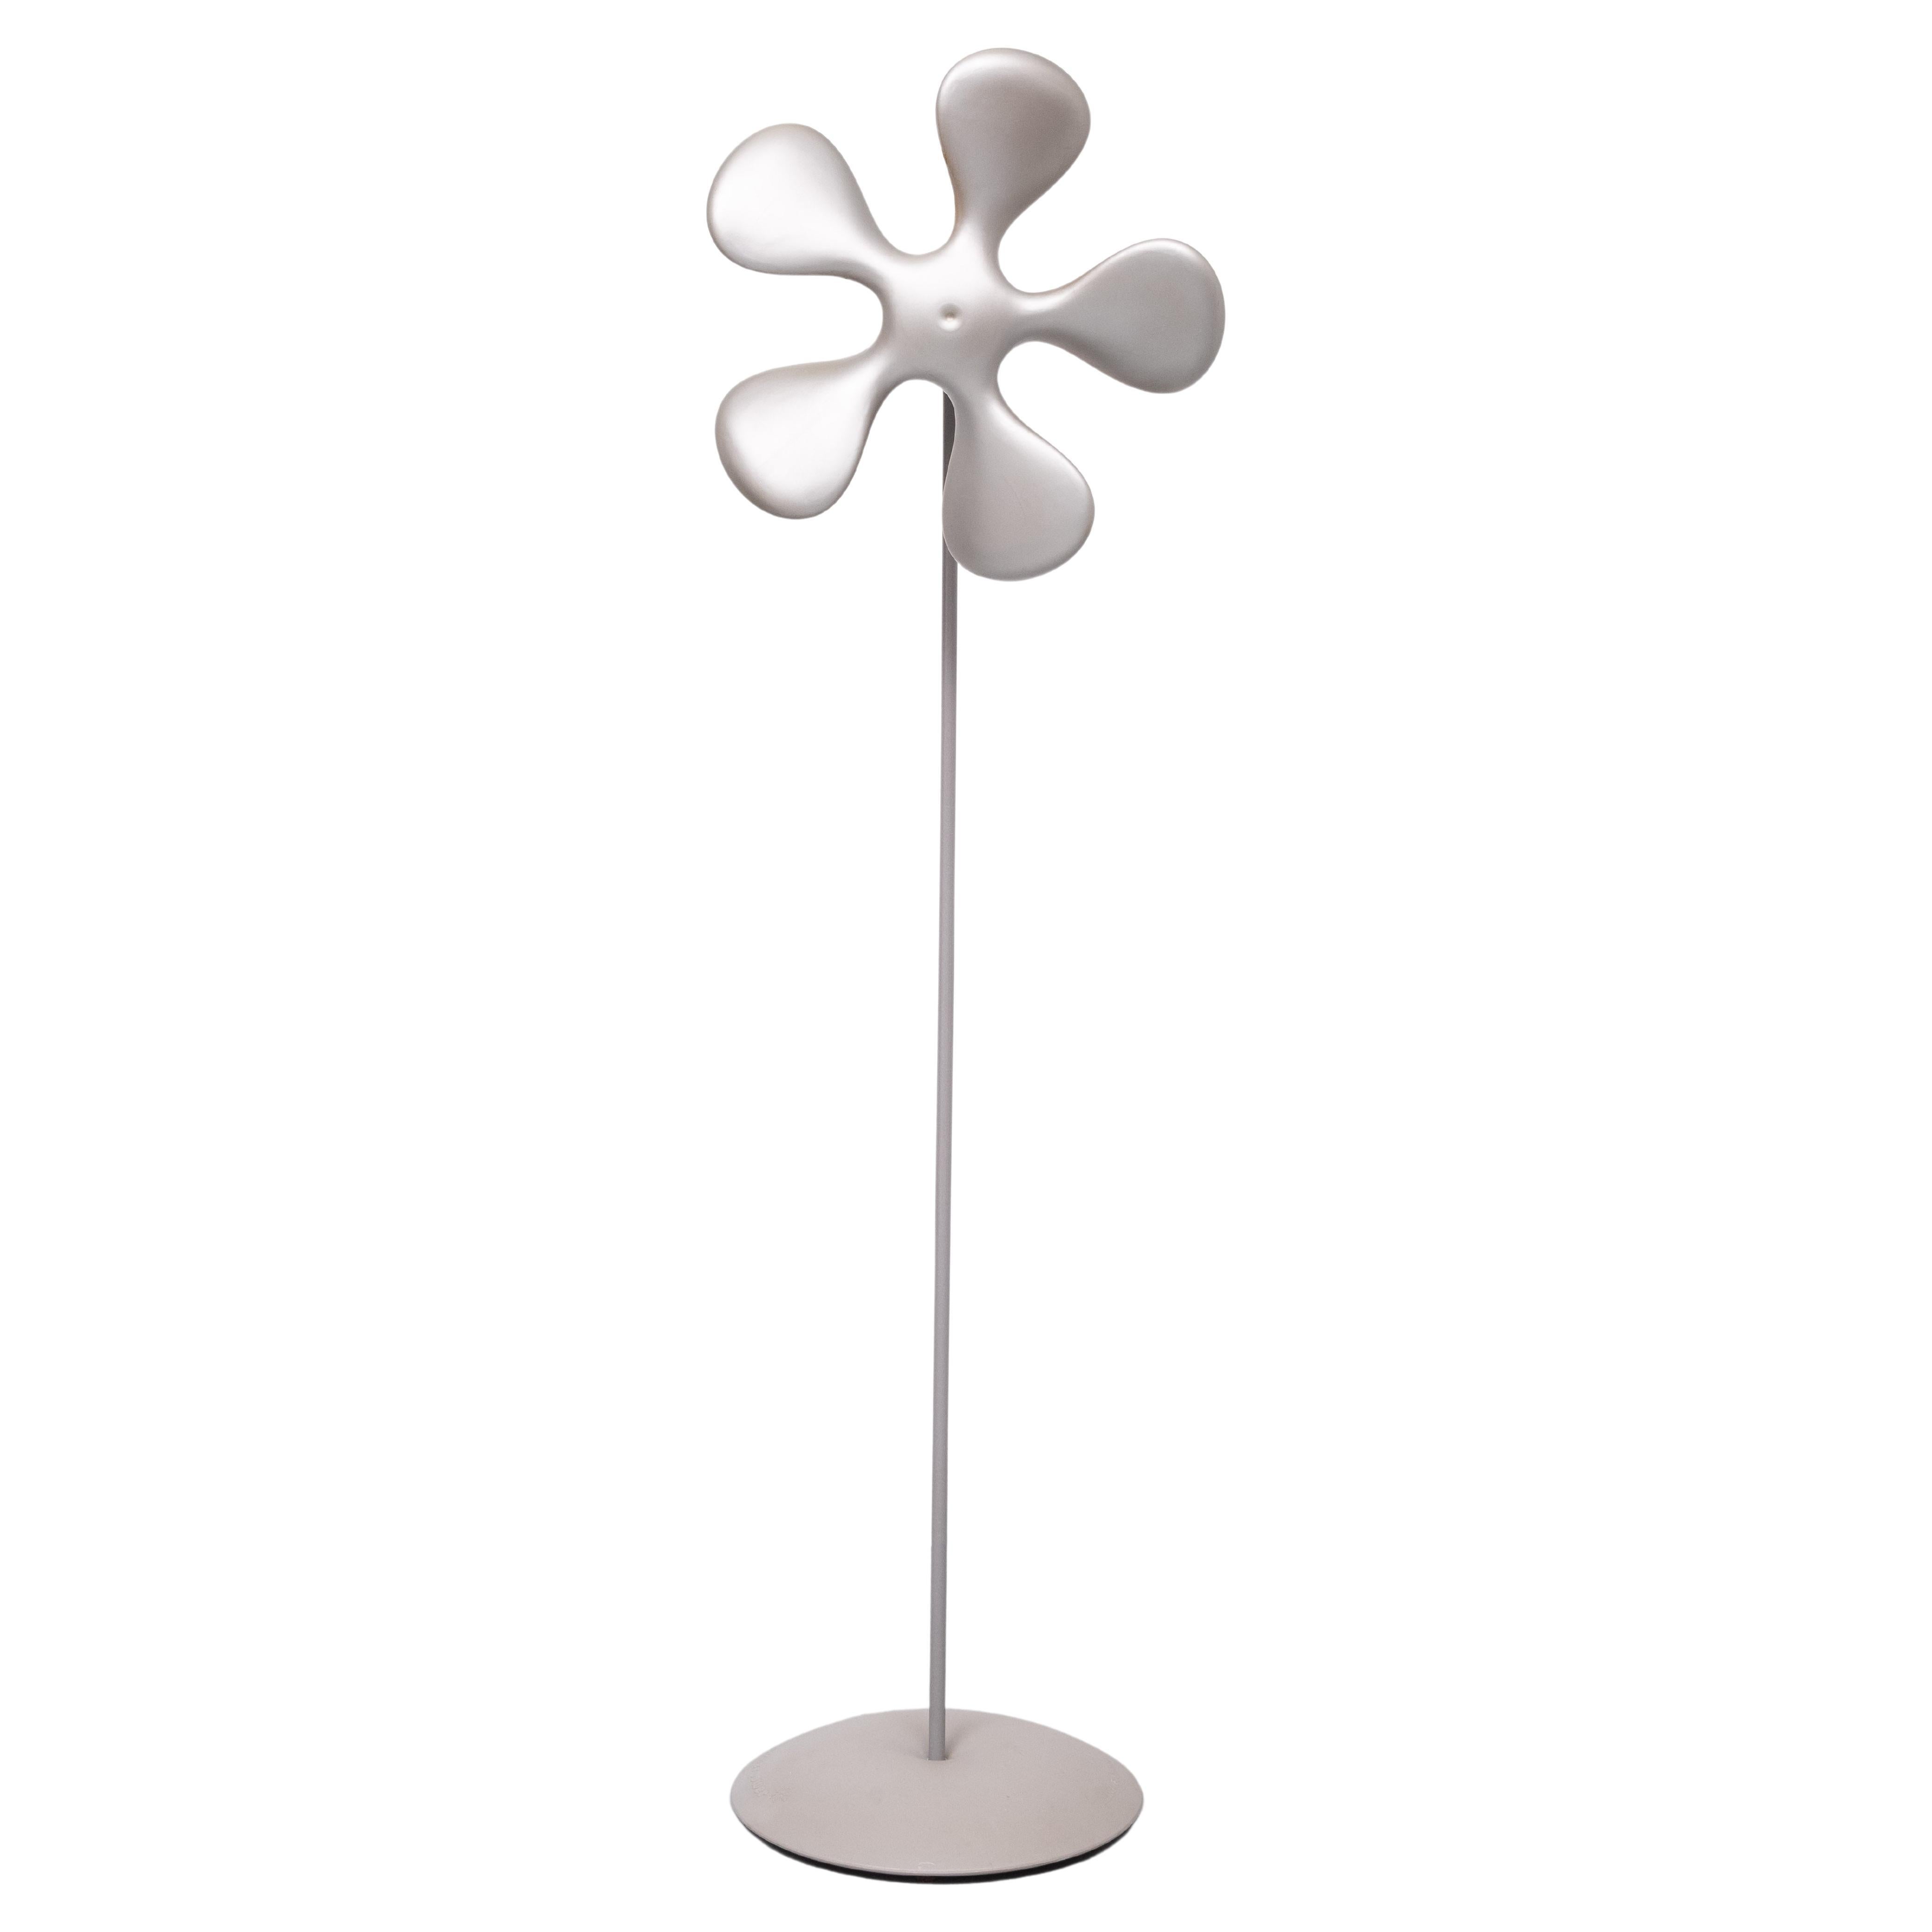 Grey Power Flower Fan by Heckhausen - Zetsche for Elmar Flàtotto 